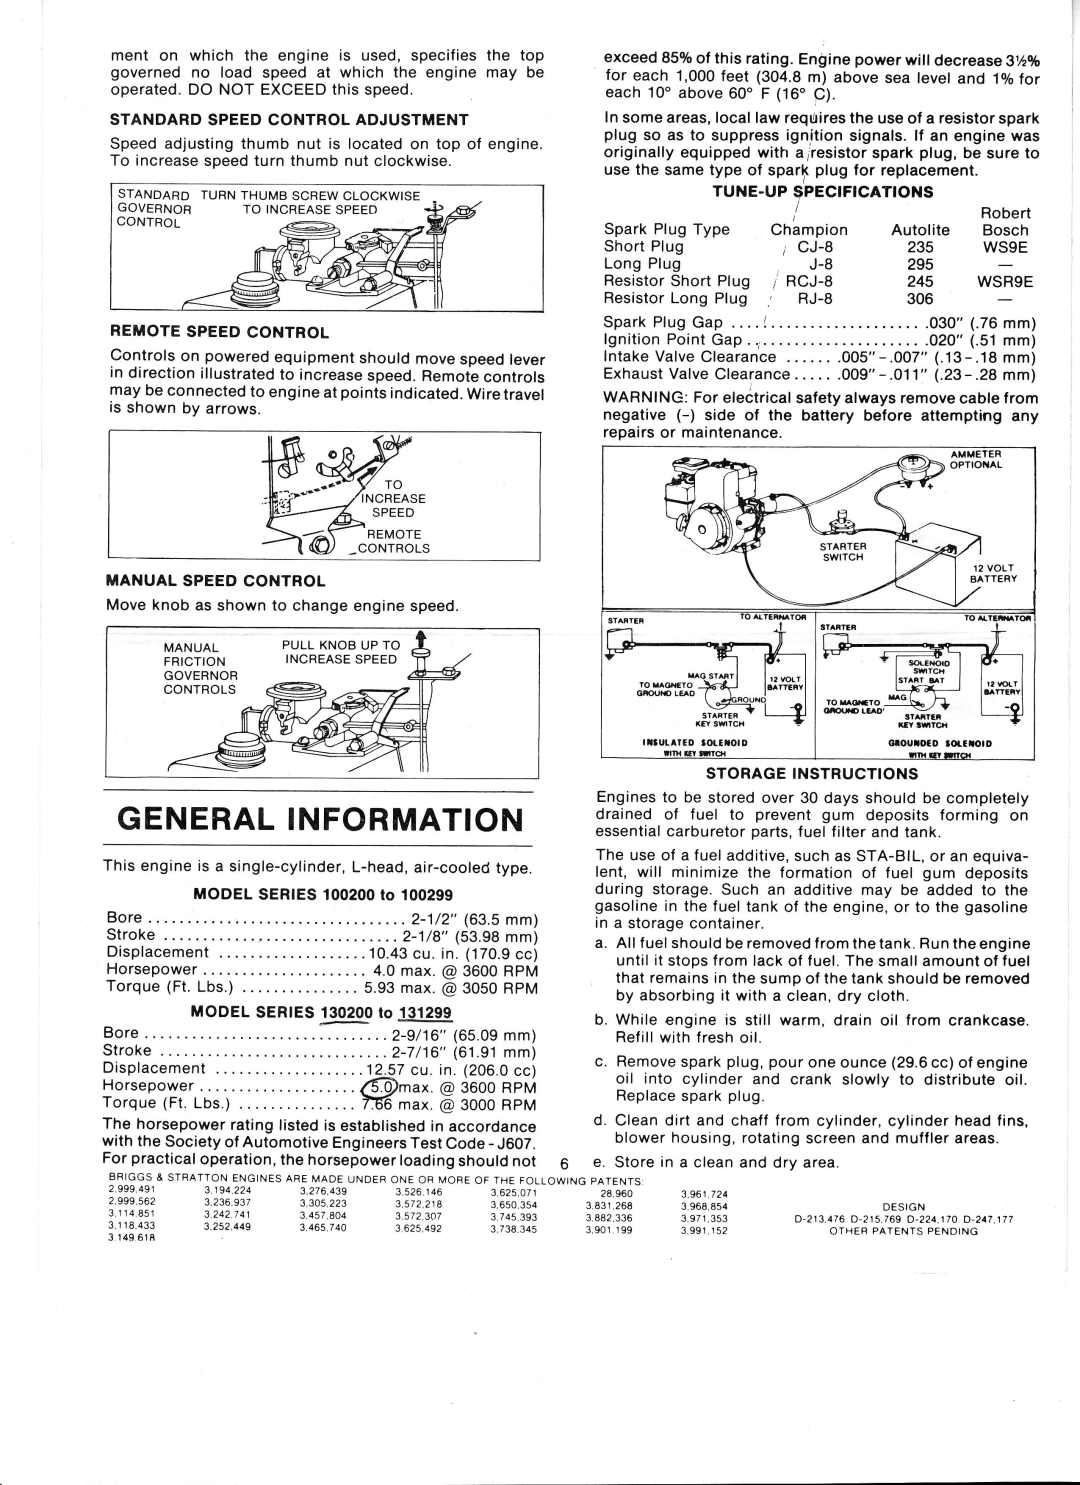 Ward's GIL-39012B manual Generalinformation 